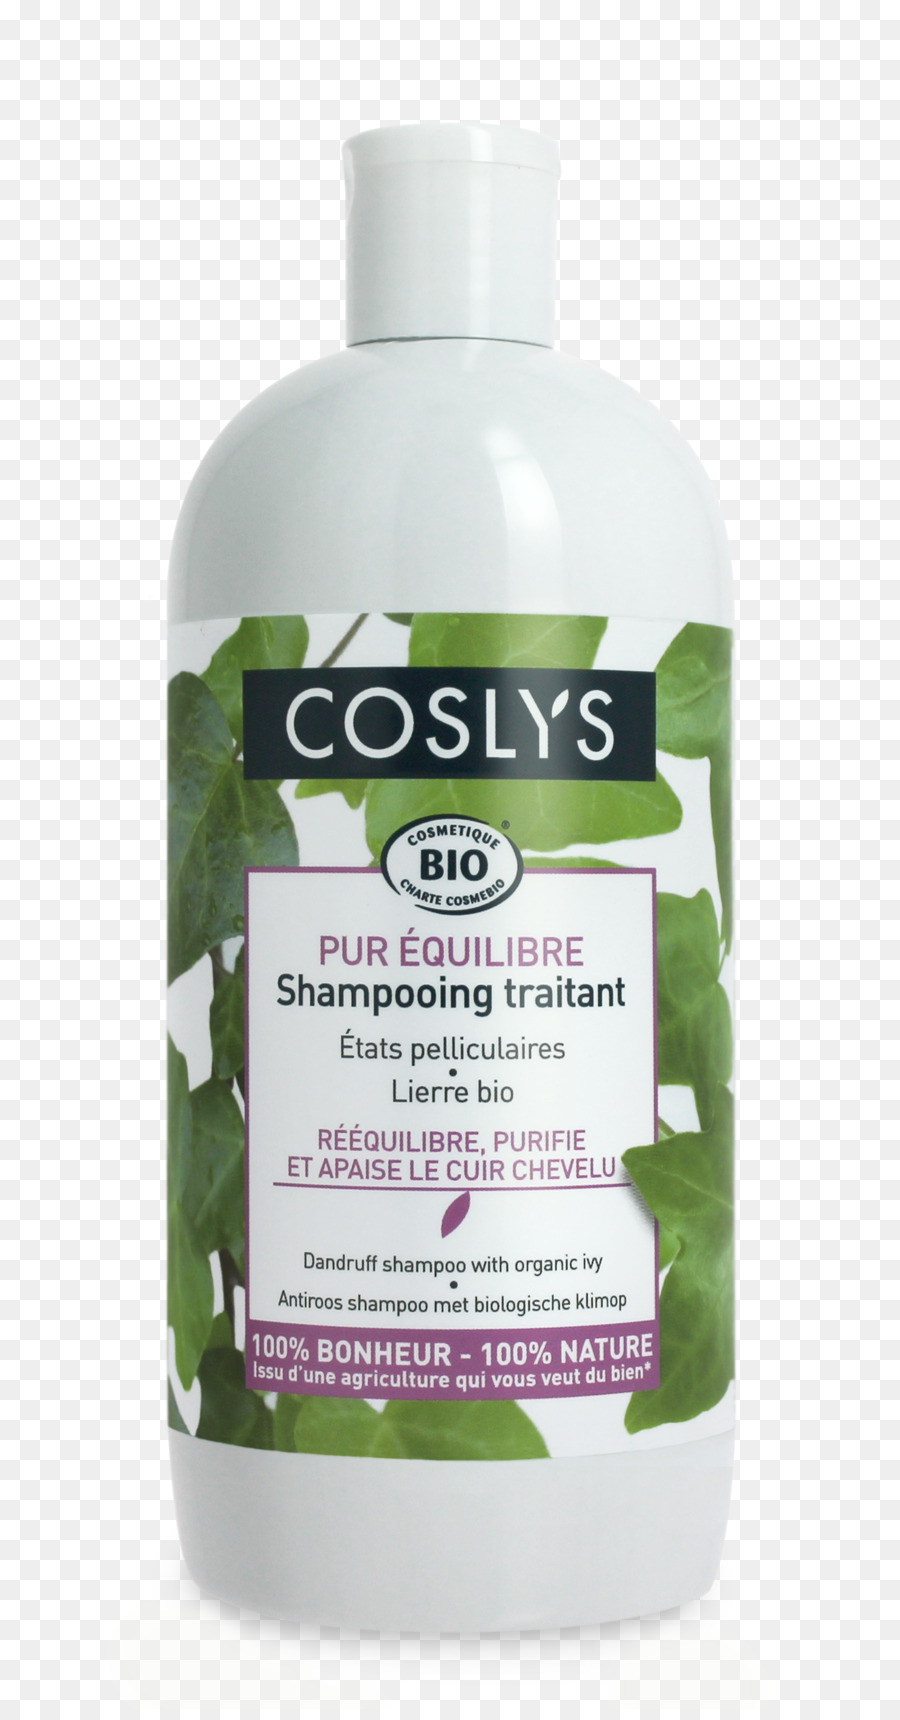 Lotion-Shampoo-Haar-Parfum-Bio-Lebensmittel - Shampoo